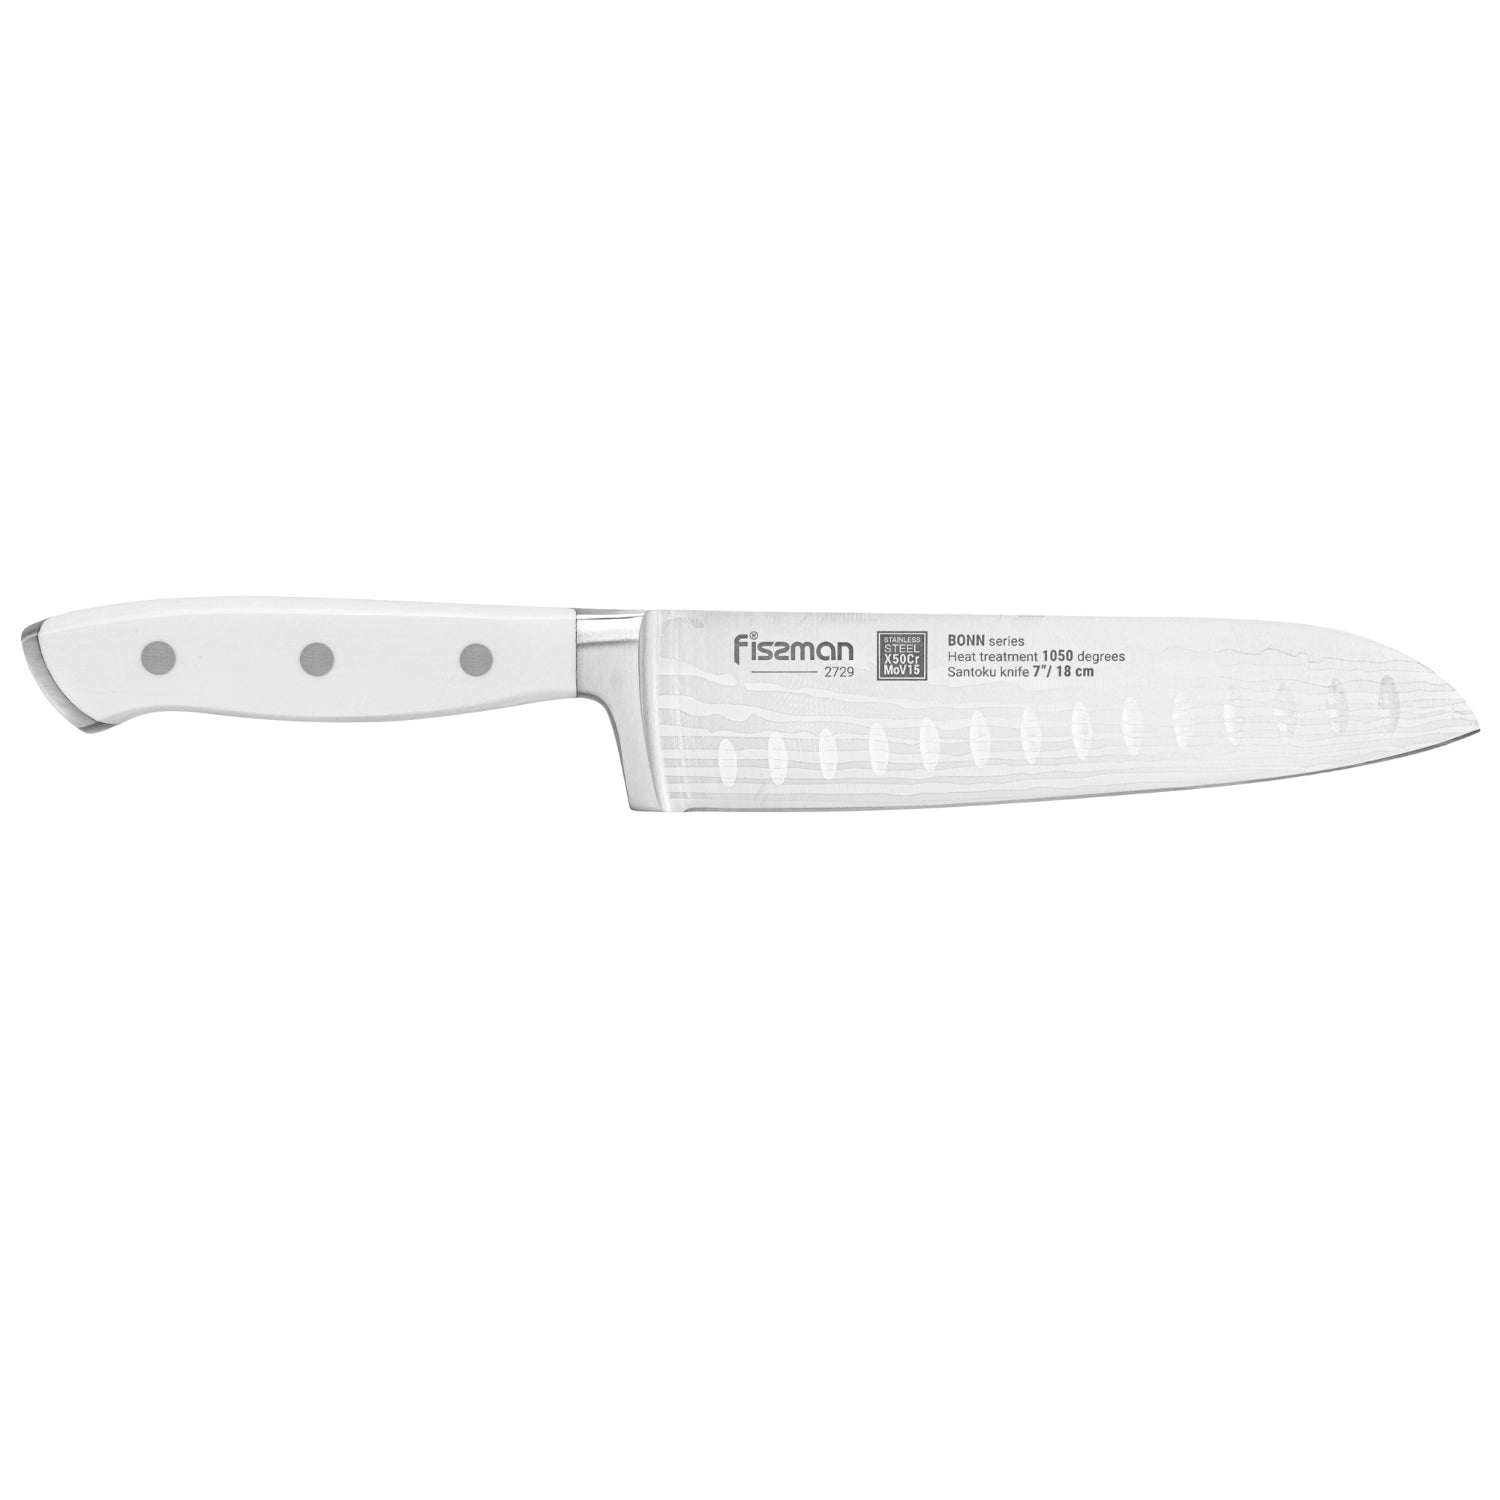 Fissman 7'' Santoku Knife Bonn - X50CrMoV15 steel